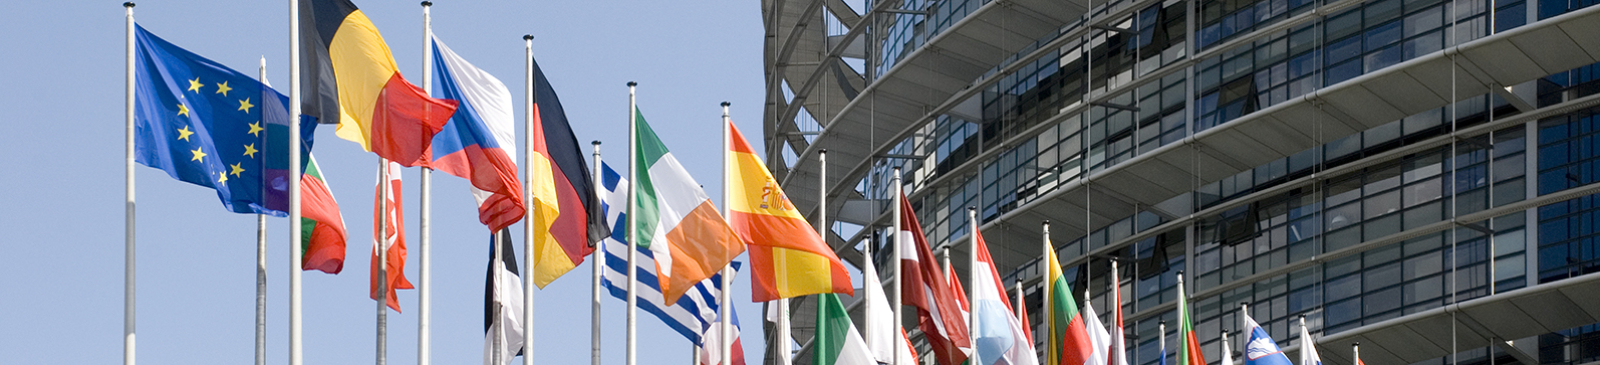 Europese vlaggen voor het Europese parlement in Brussel